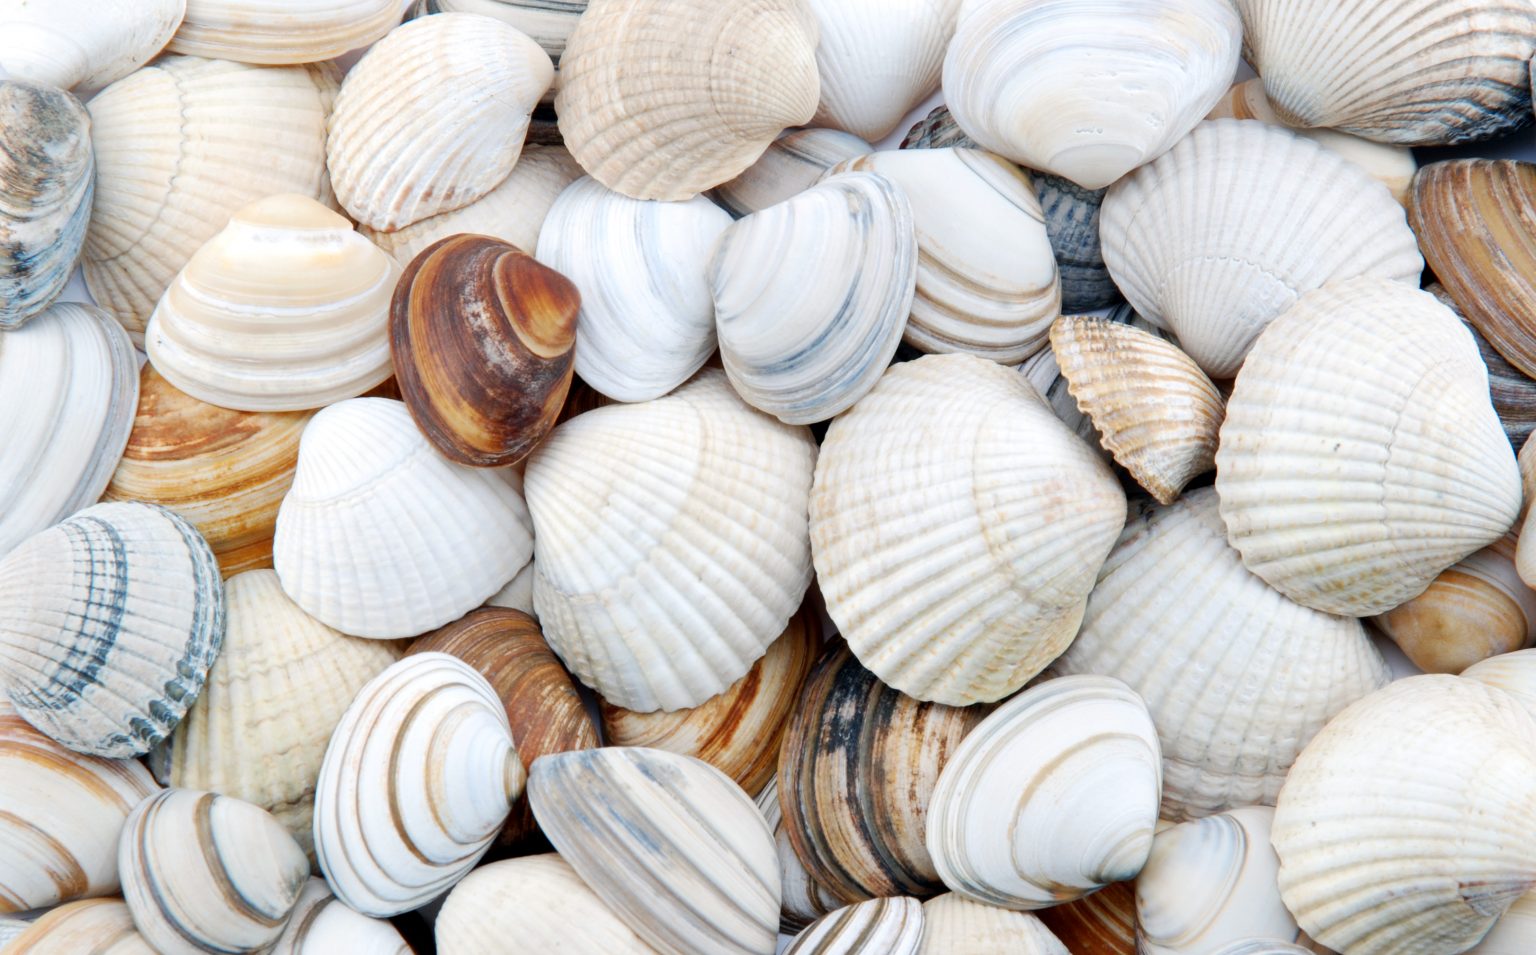 Water purification by seashells